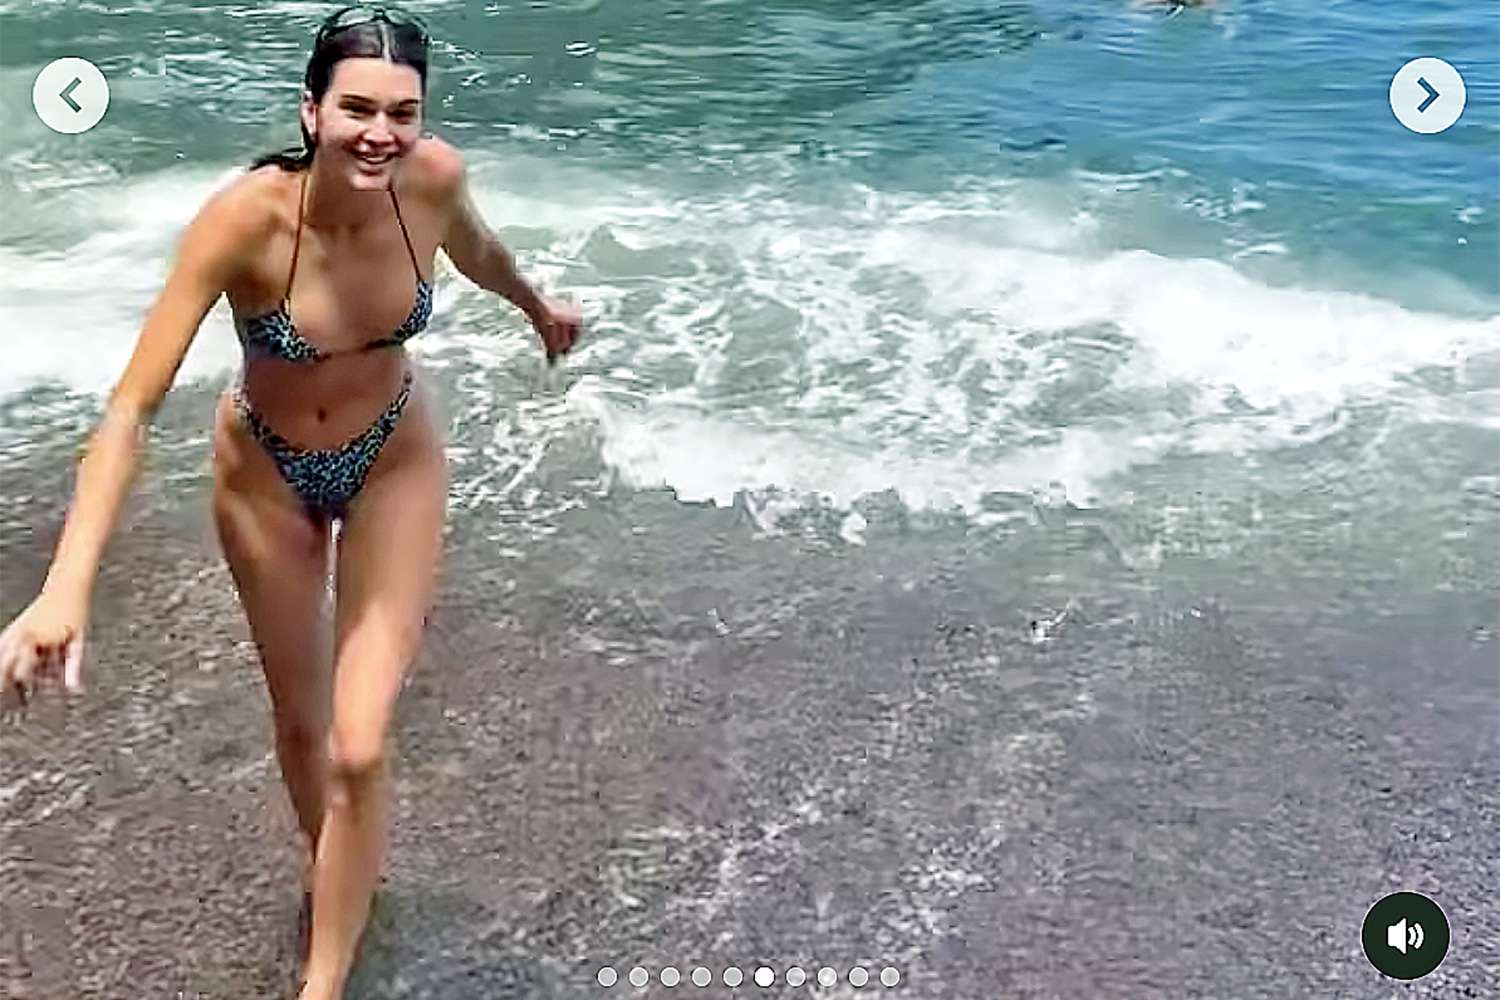 Kendall Jenner Rocks Multiple Floral Bikinis During Tropical Oceanside Getaway